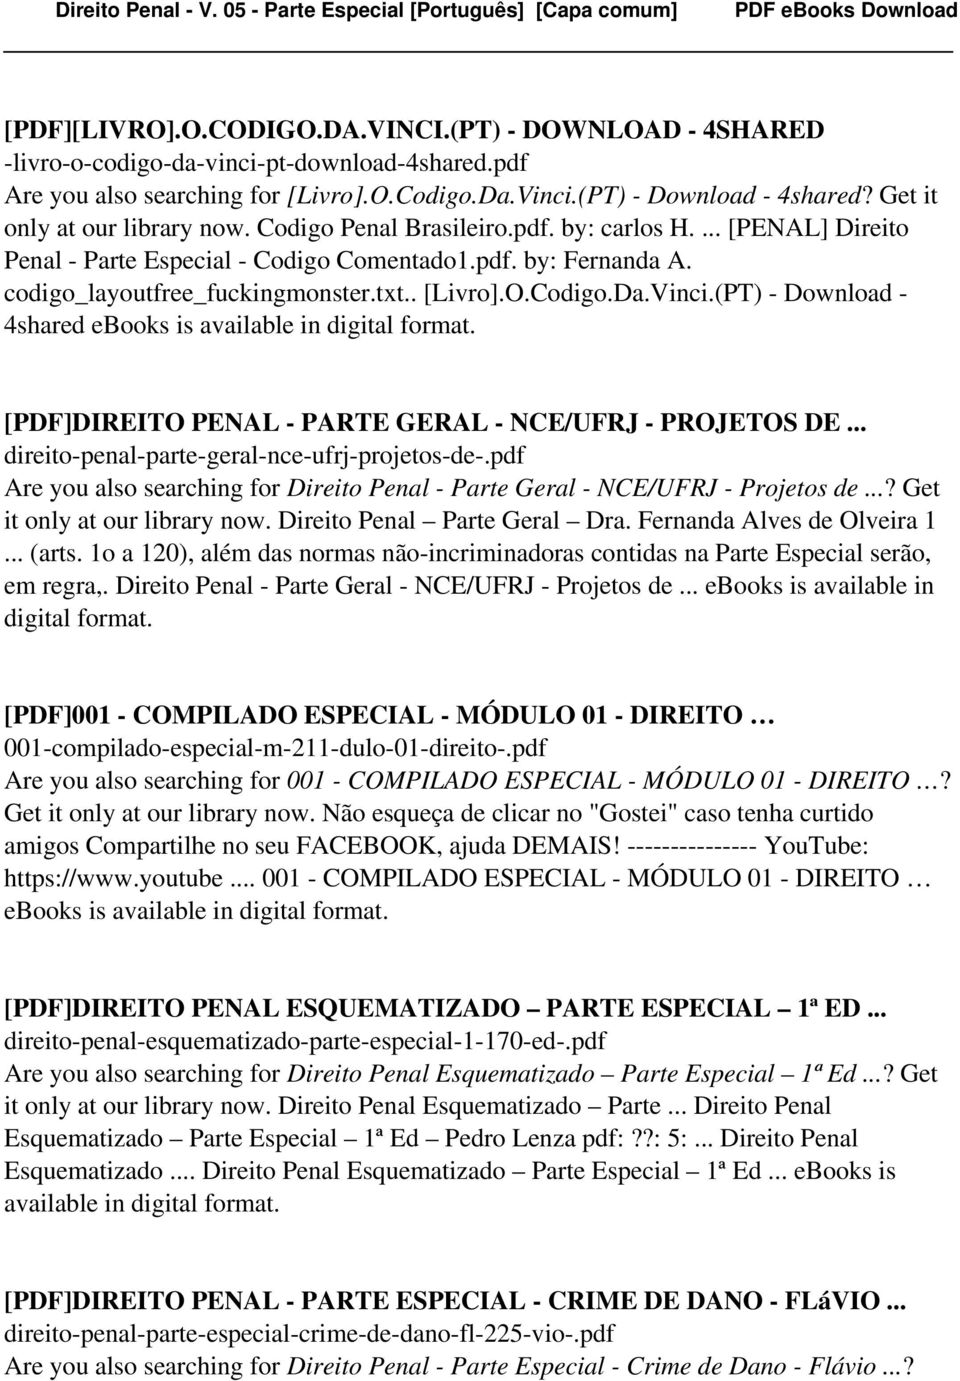 direito penal esquematizado parte geral pedro lenza download pdf